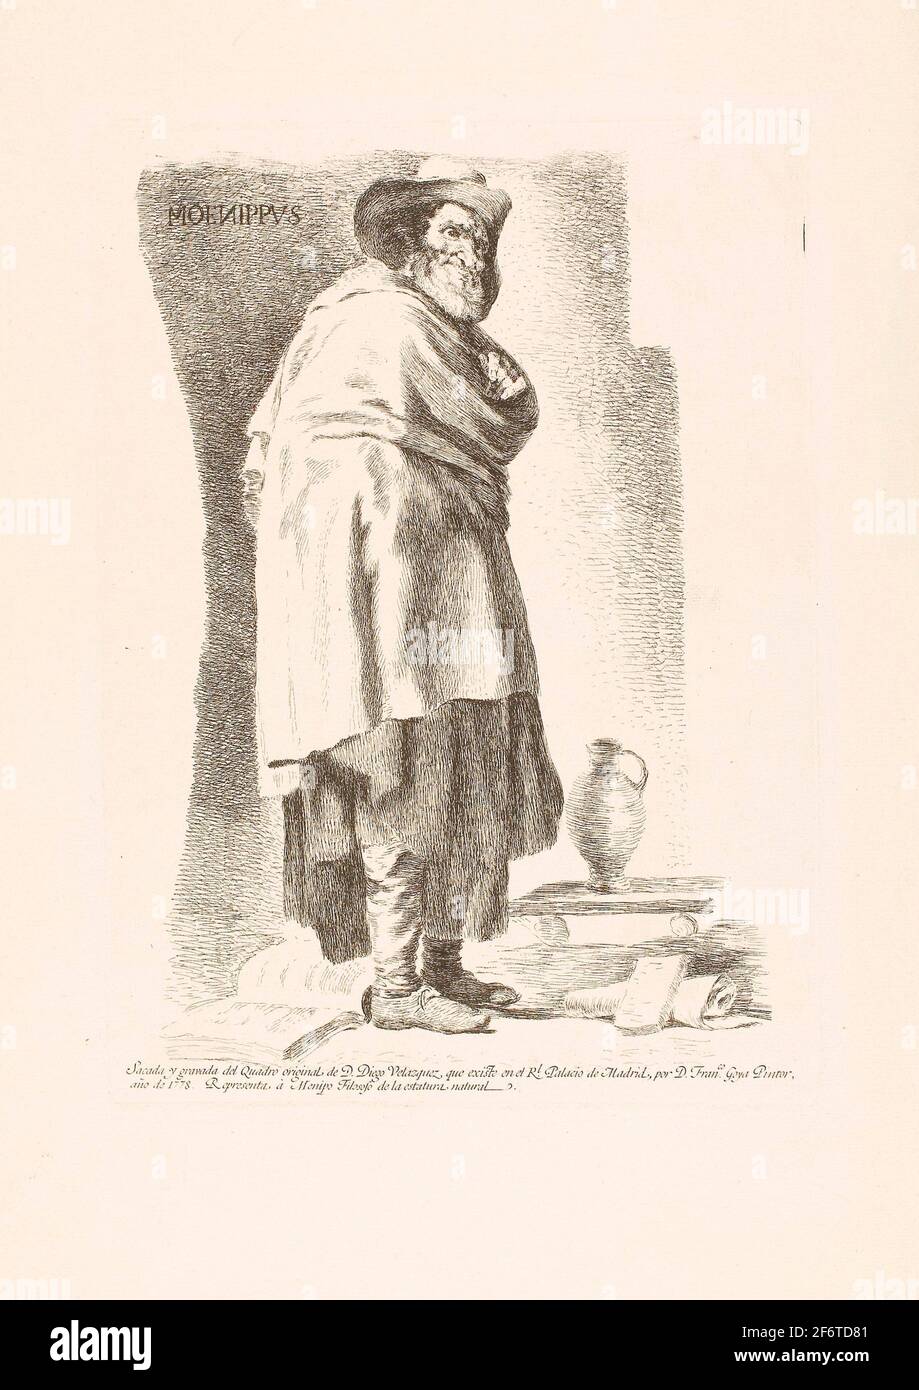 Author: Francisco Jos de Goya y Lucientes. Menippus - 1778 - Francisco Jos de Goya y Lucientes (Spanish, 1746-1828) after Diego Velzquez (Spanish, Stock Photo